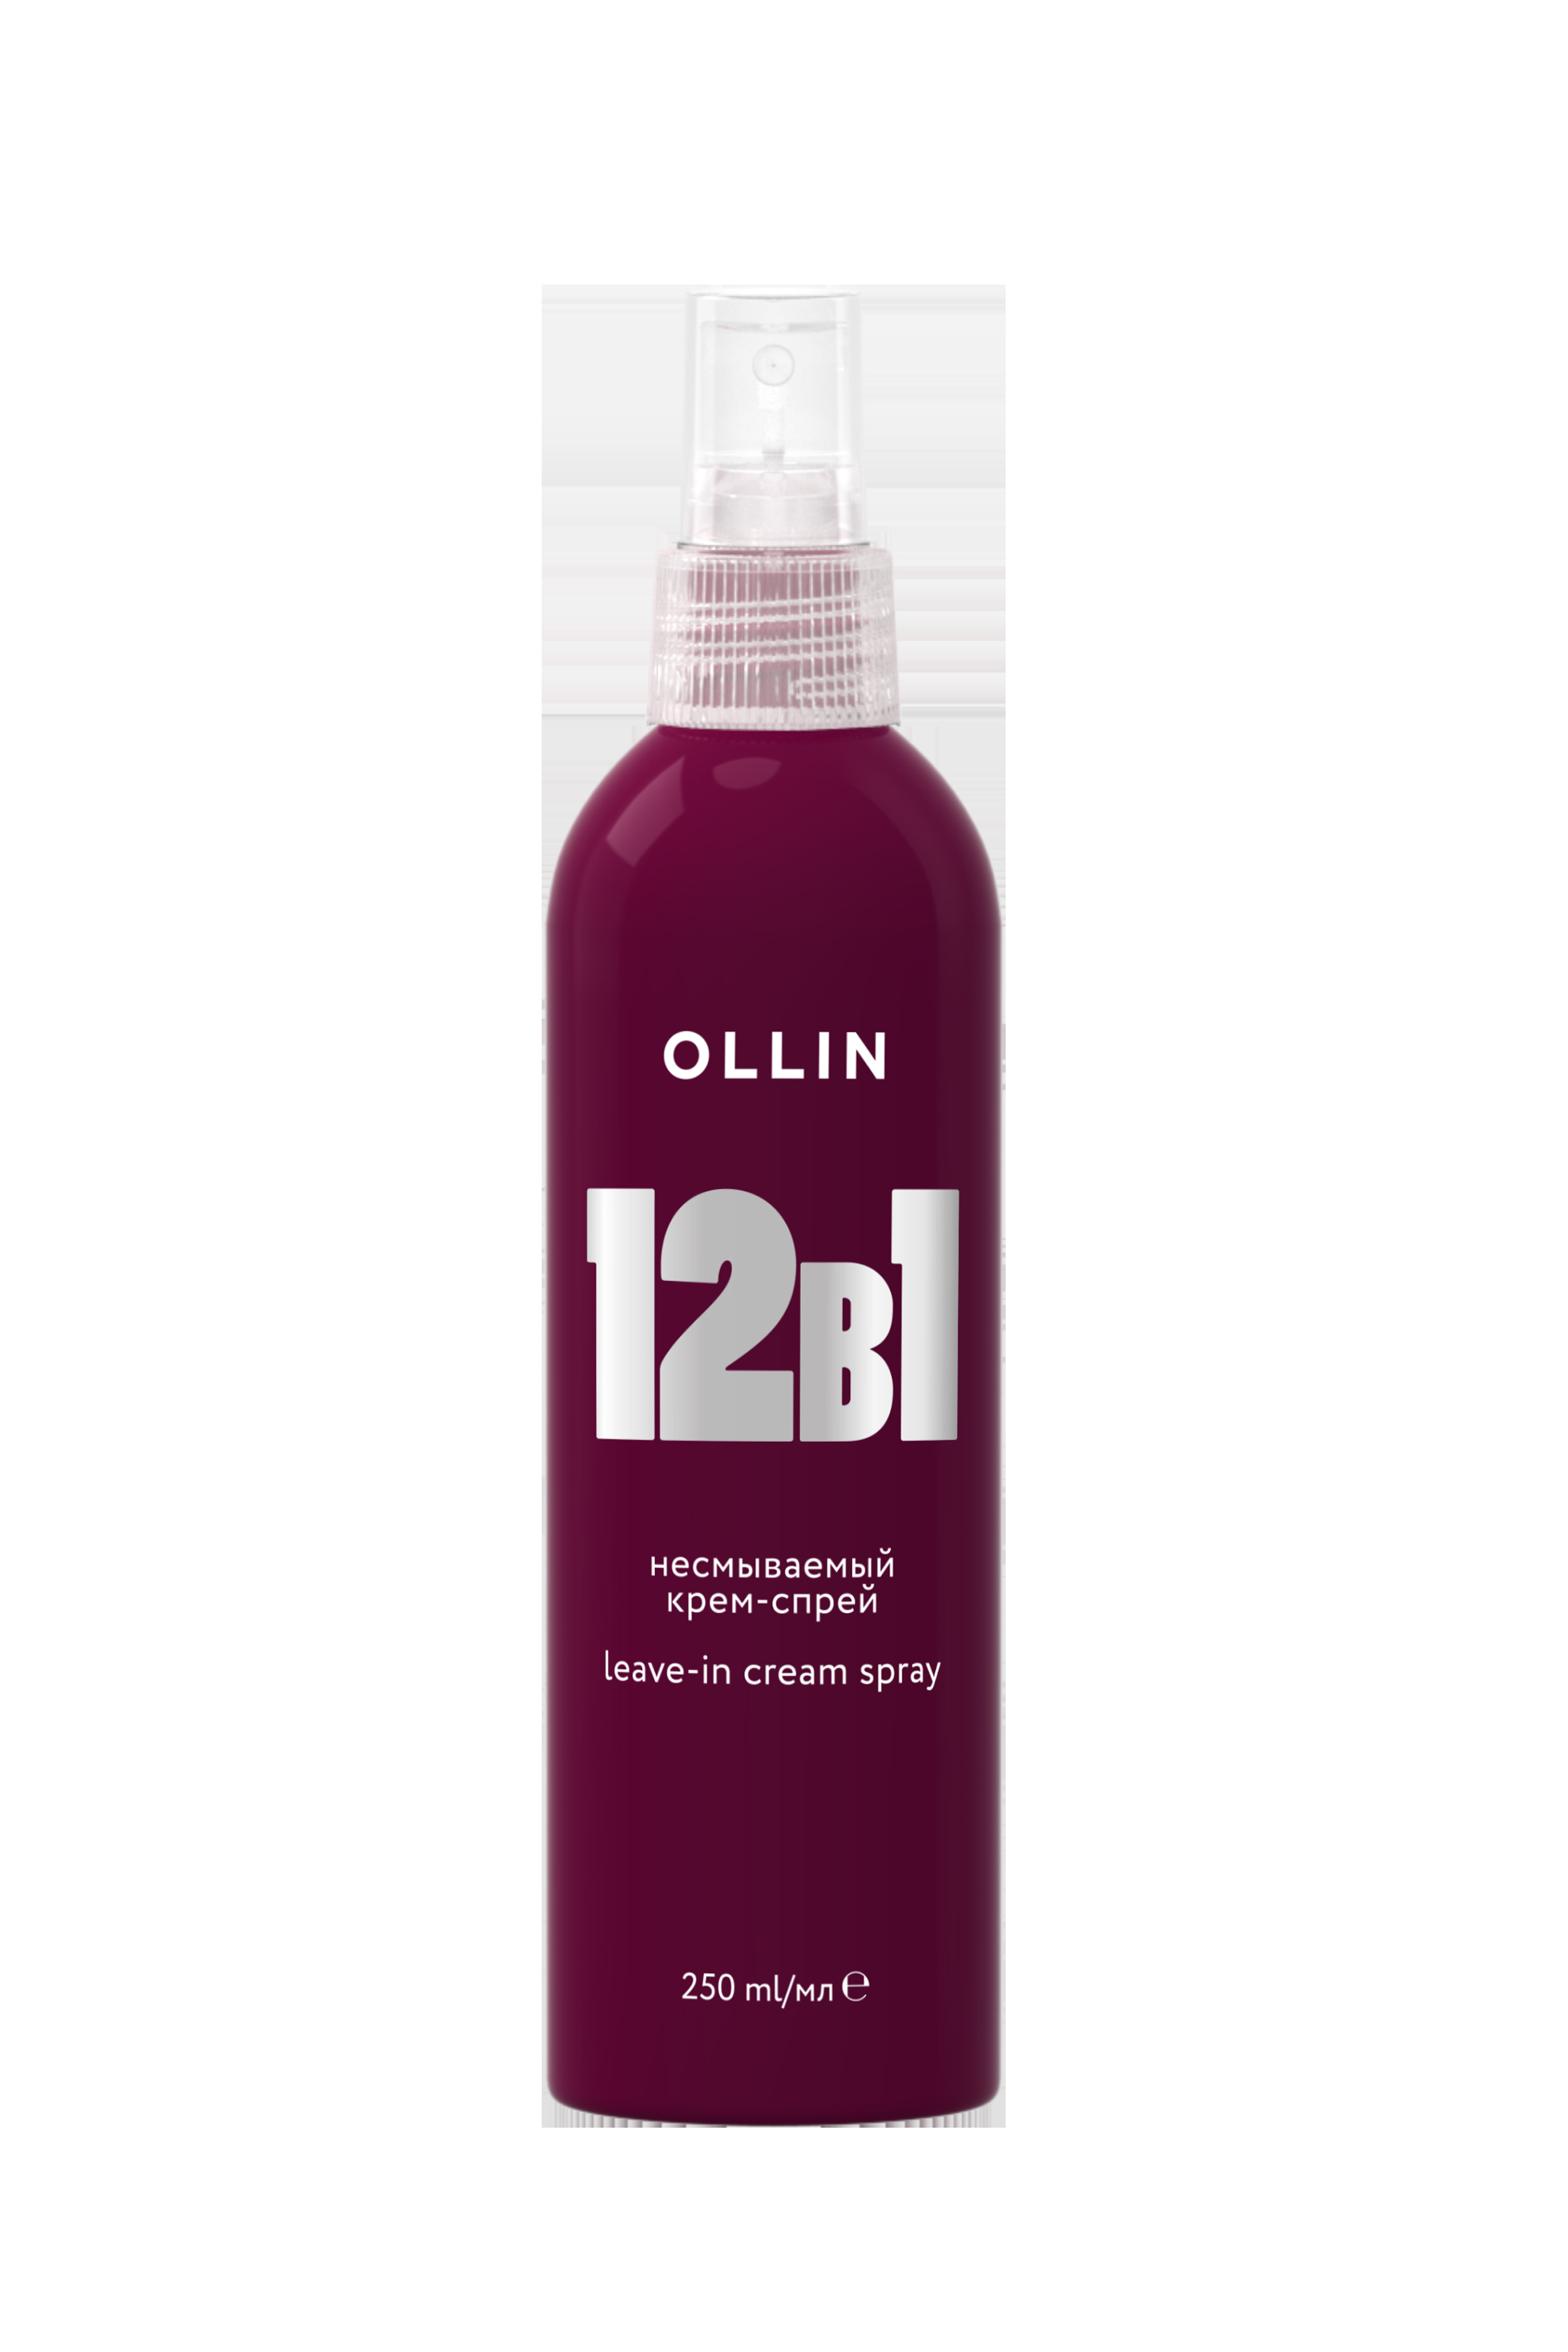 OLLIN "12 в 1" Несмываемый крем-спрей 250мл